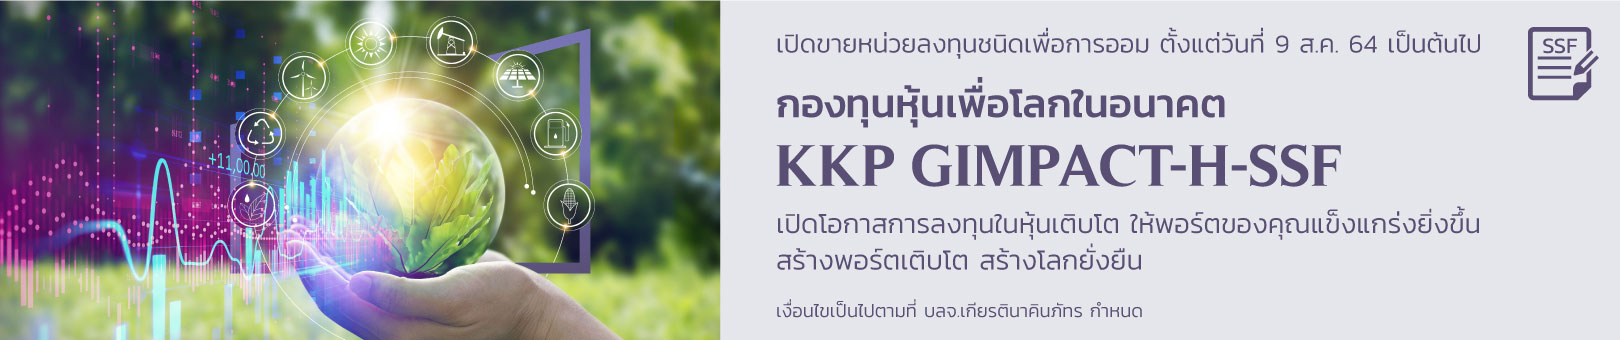 KKP-GIMPACT-H_SSF-1620x340